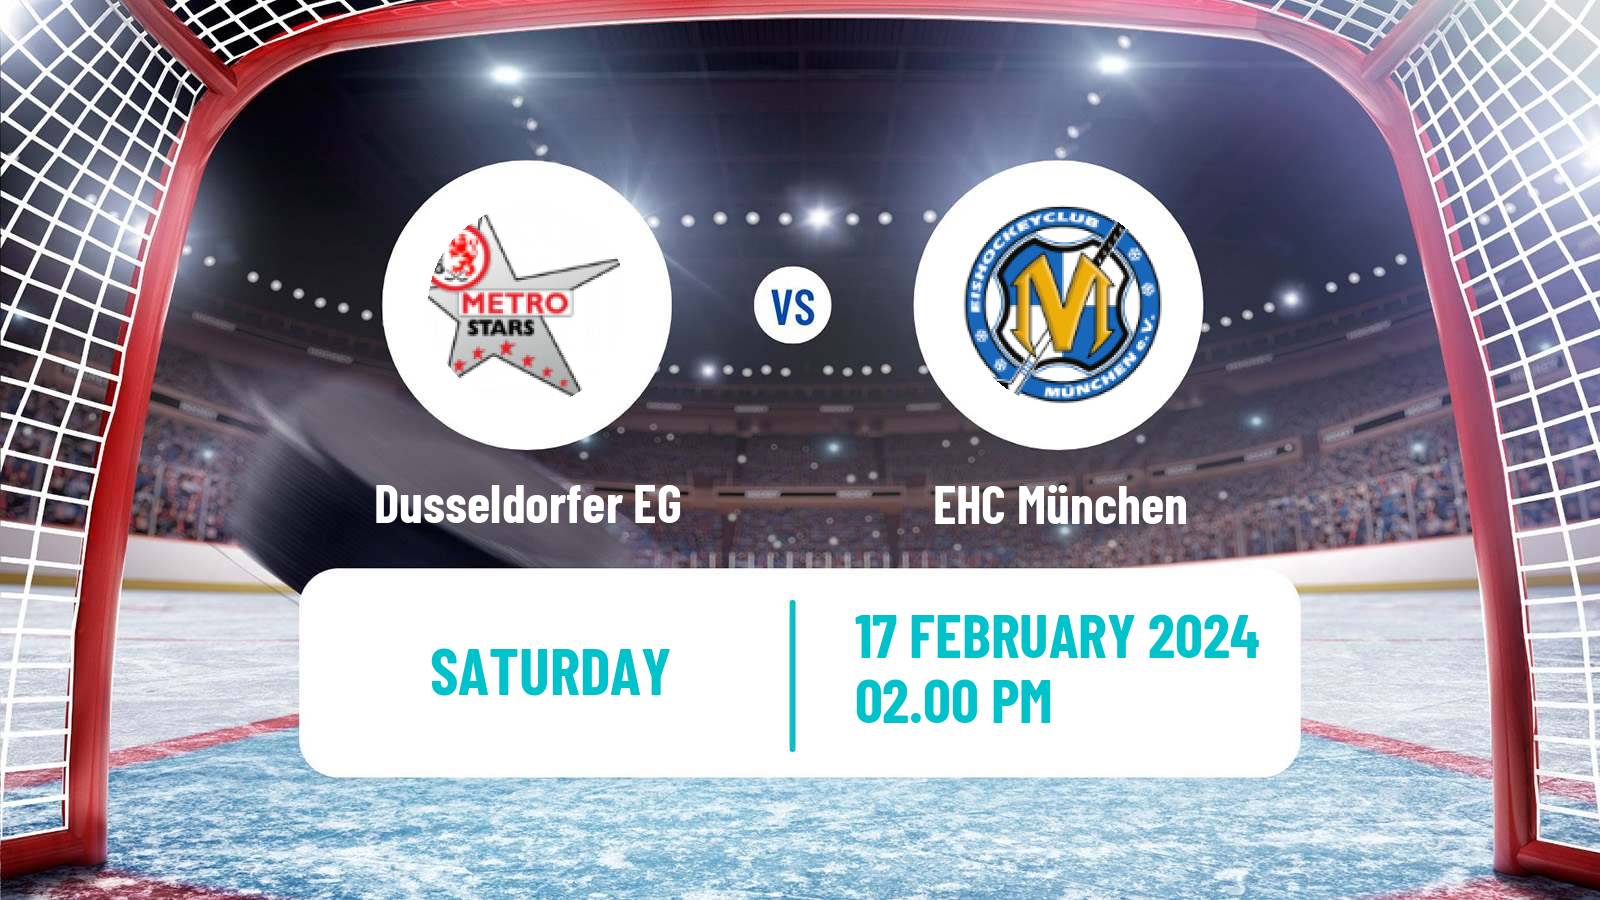 Hockey German Ice Hockey League Dusseldorfer EG - EHC München